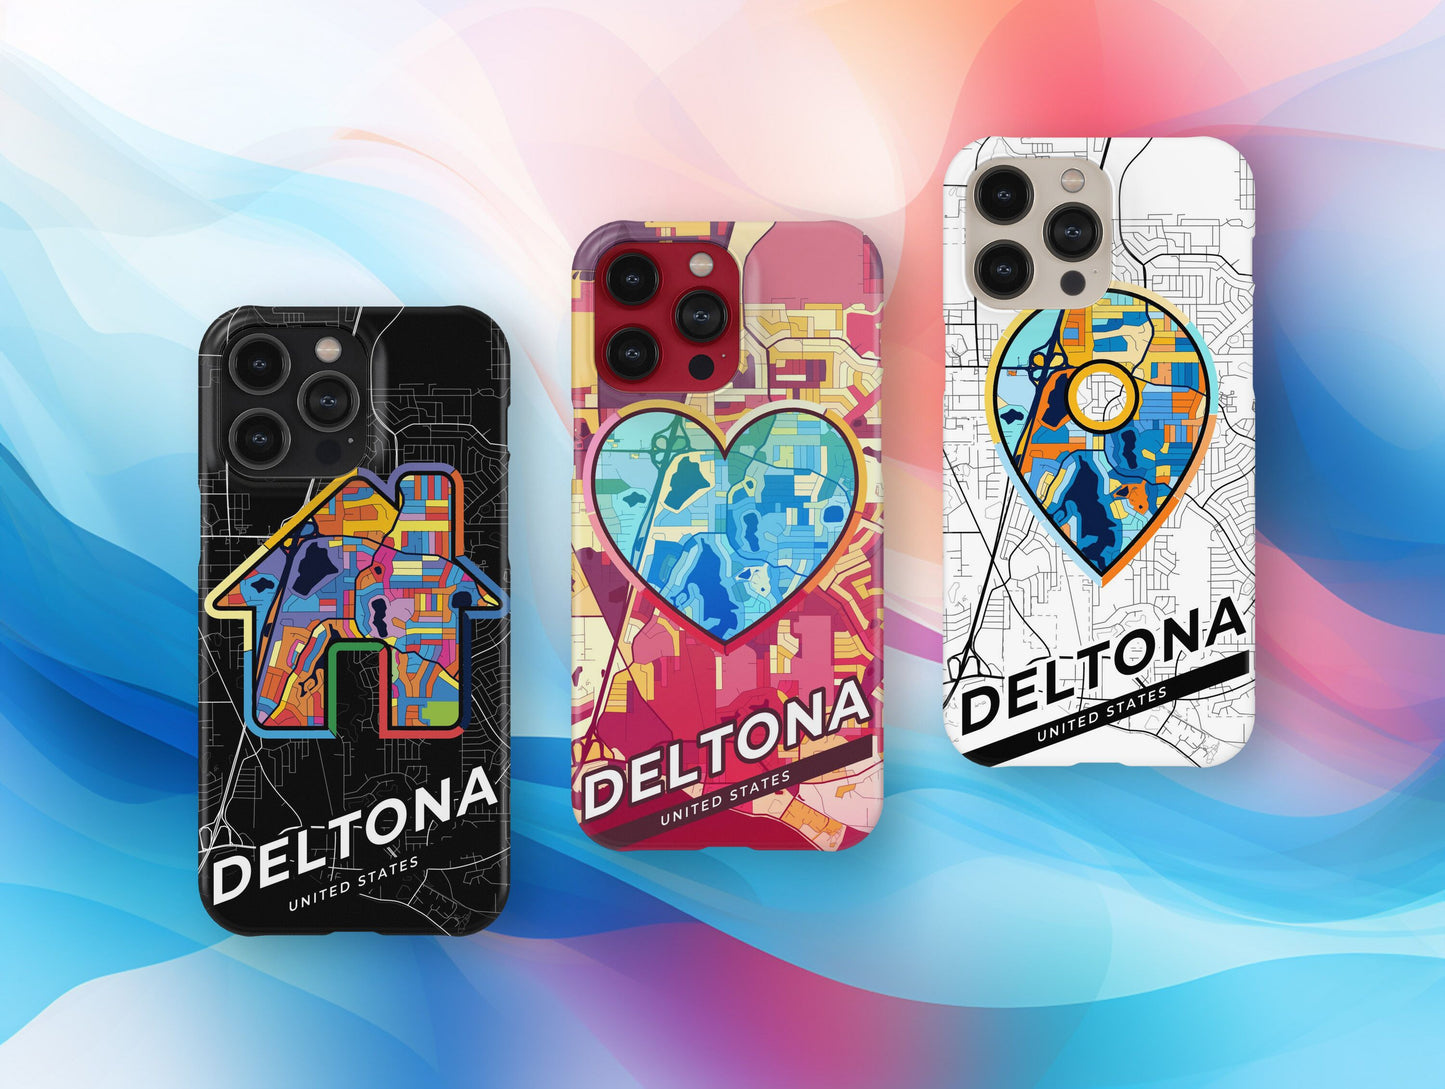 Deltona Florida slim phone case with colorful icon. Birthday, wedding or housewarming gift. Couple match cases.